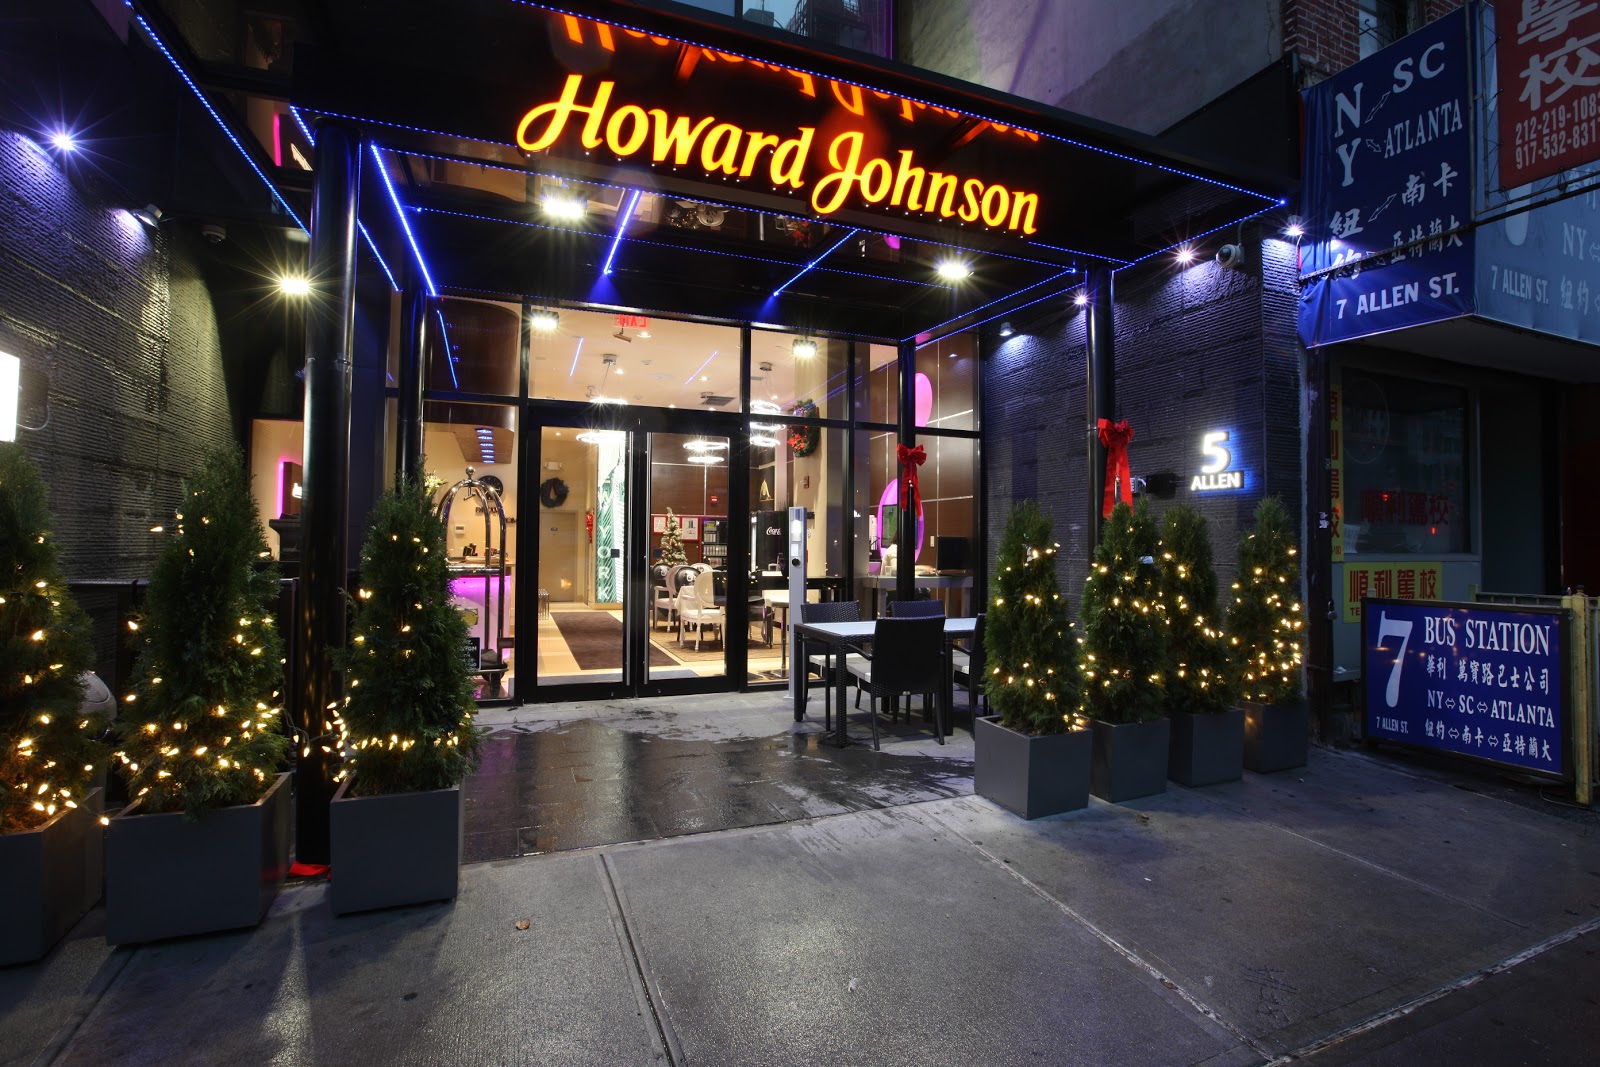 Photo of Howard Johnson Manhattan Soho in New York City, New York, United States - 1 Picture of Point of interest, Establishment, Lodging